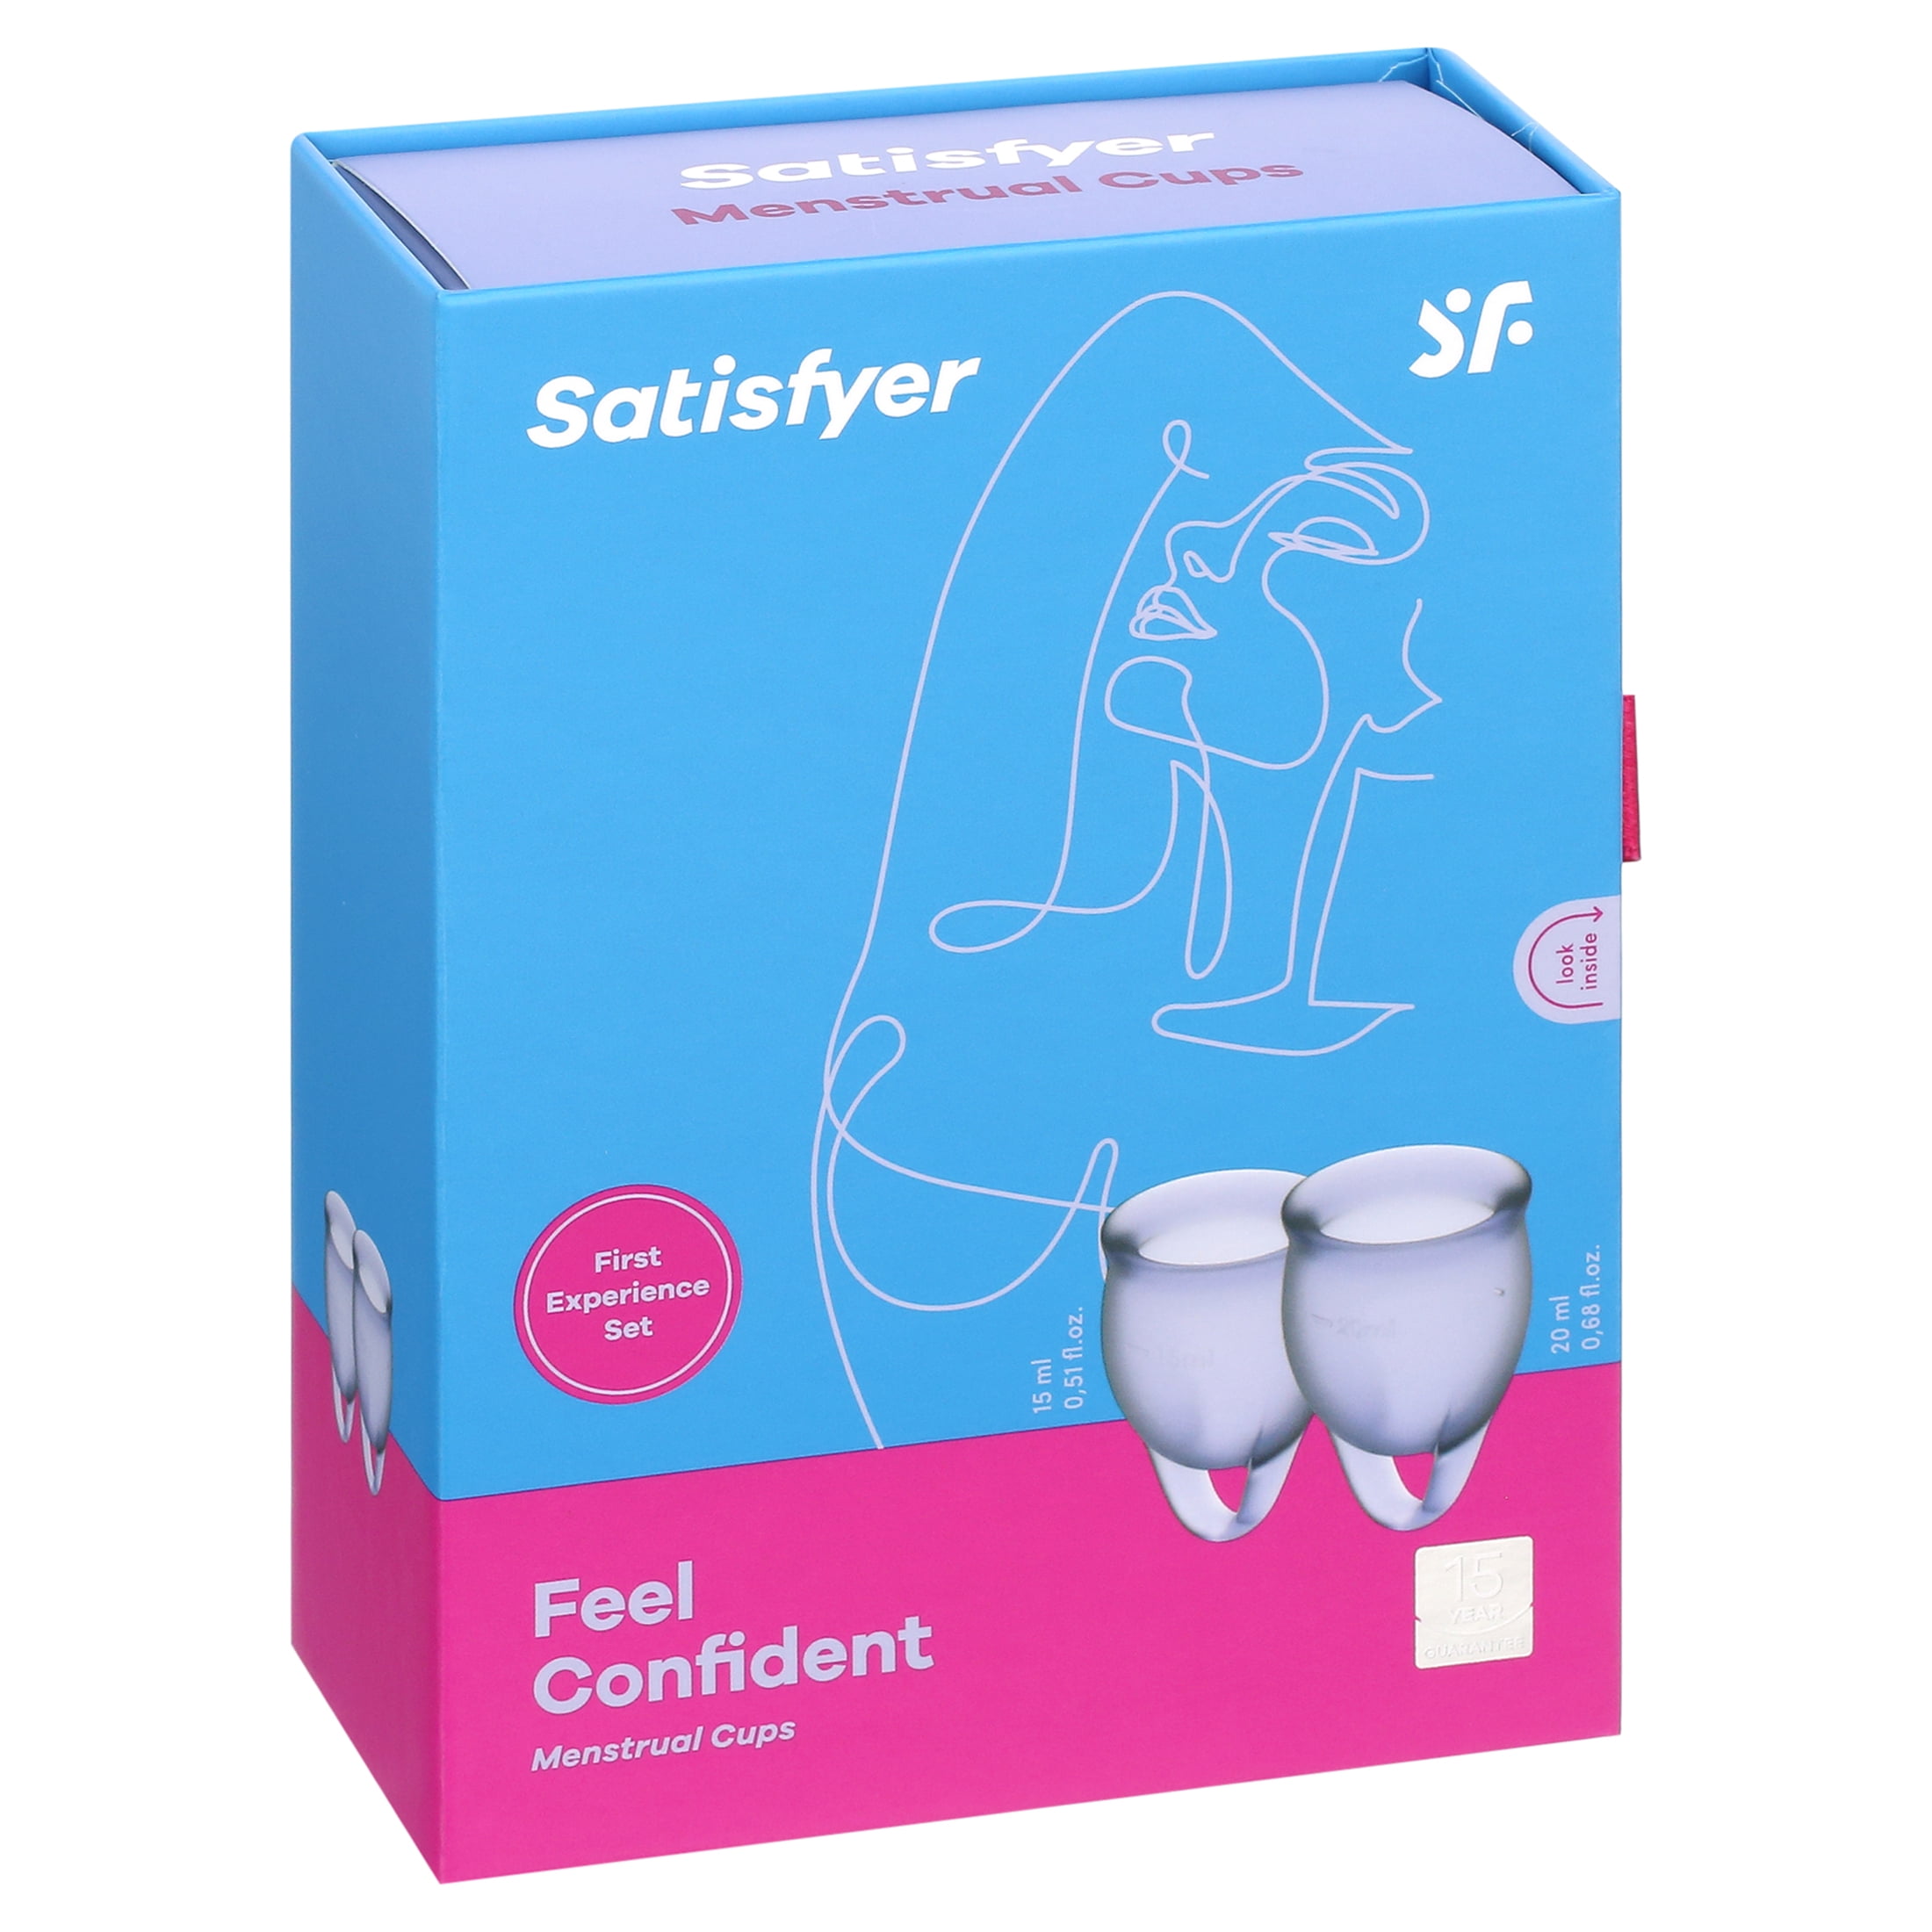 Menstrual Cup Satisfyer